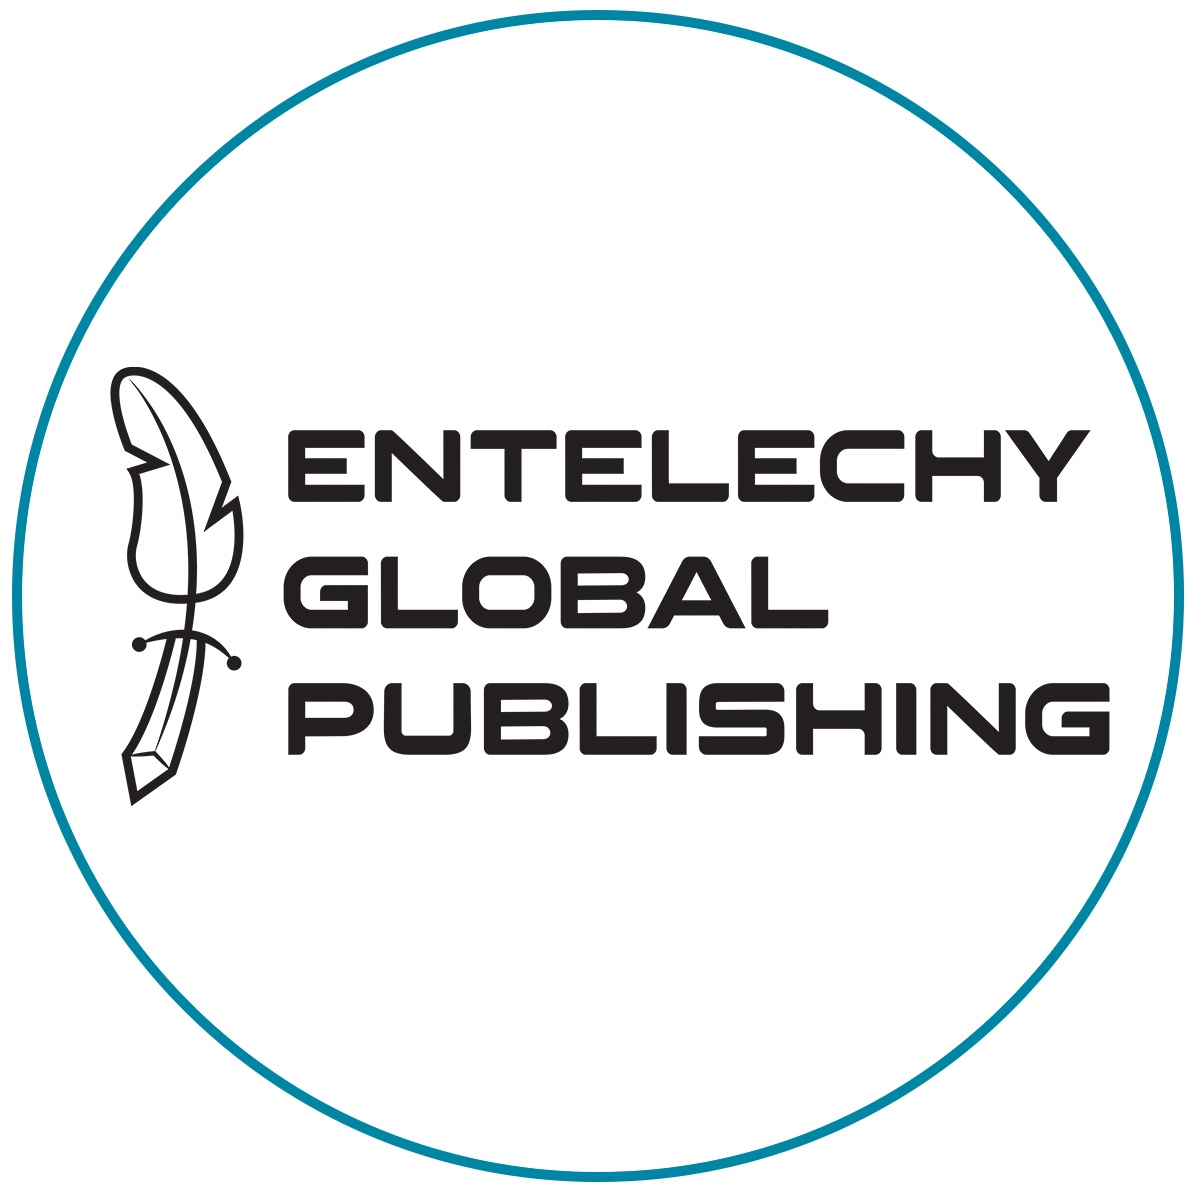 Entelechy Global Publishing